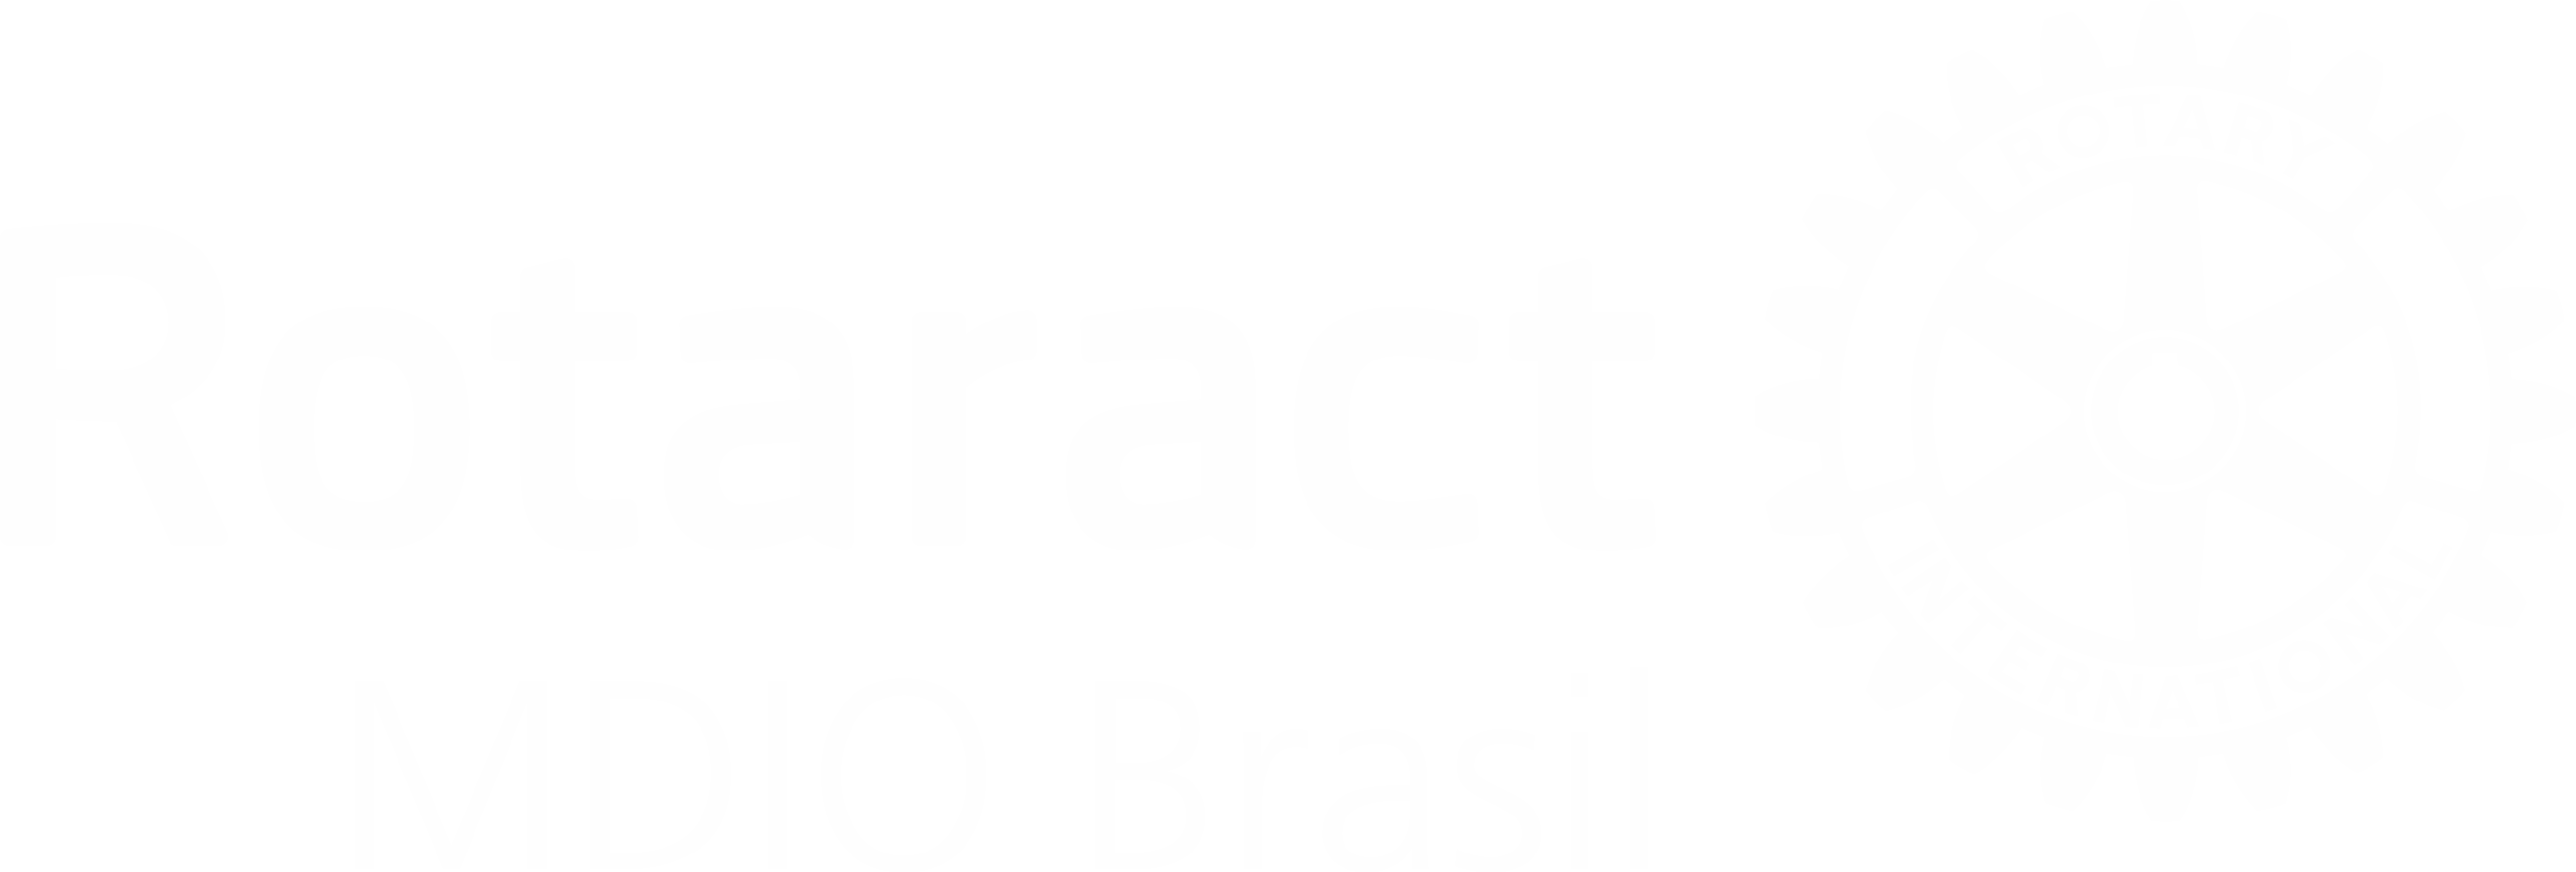 Rotaract Brasil